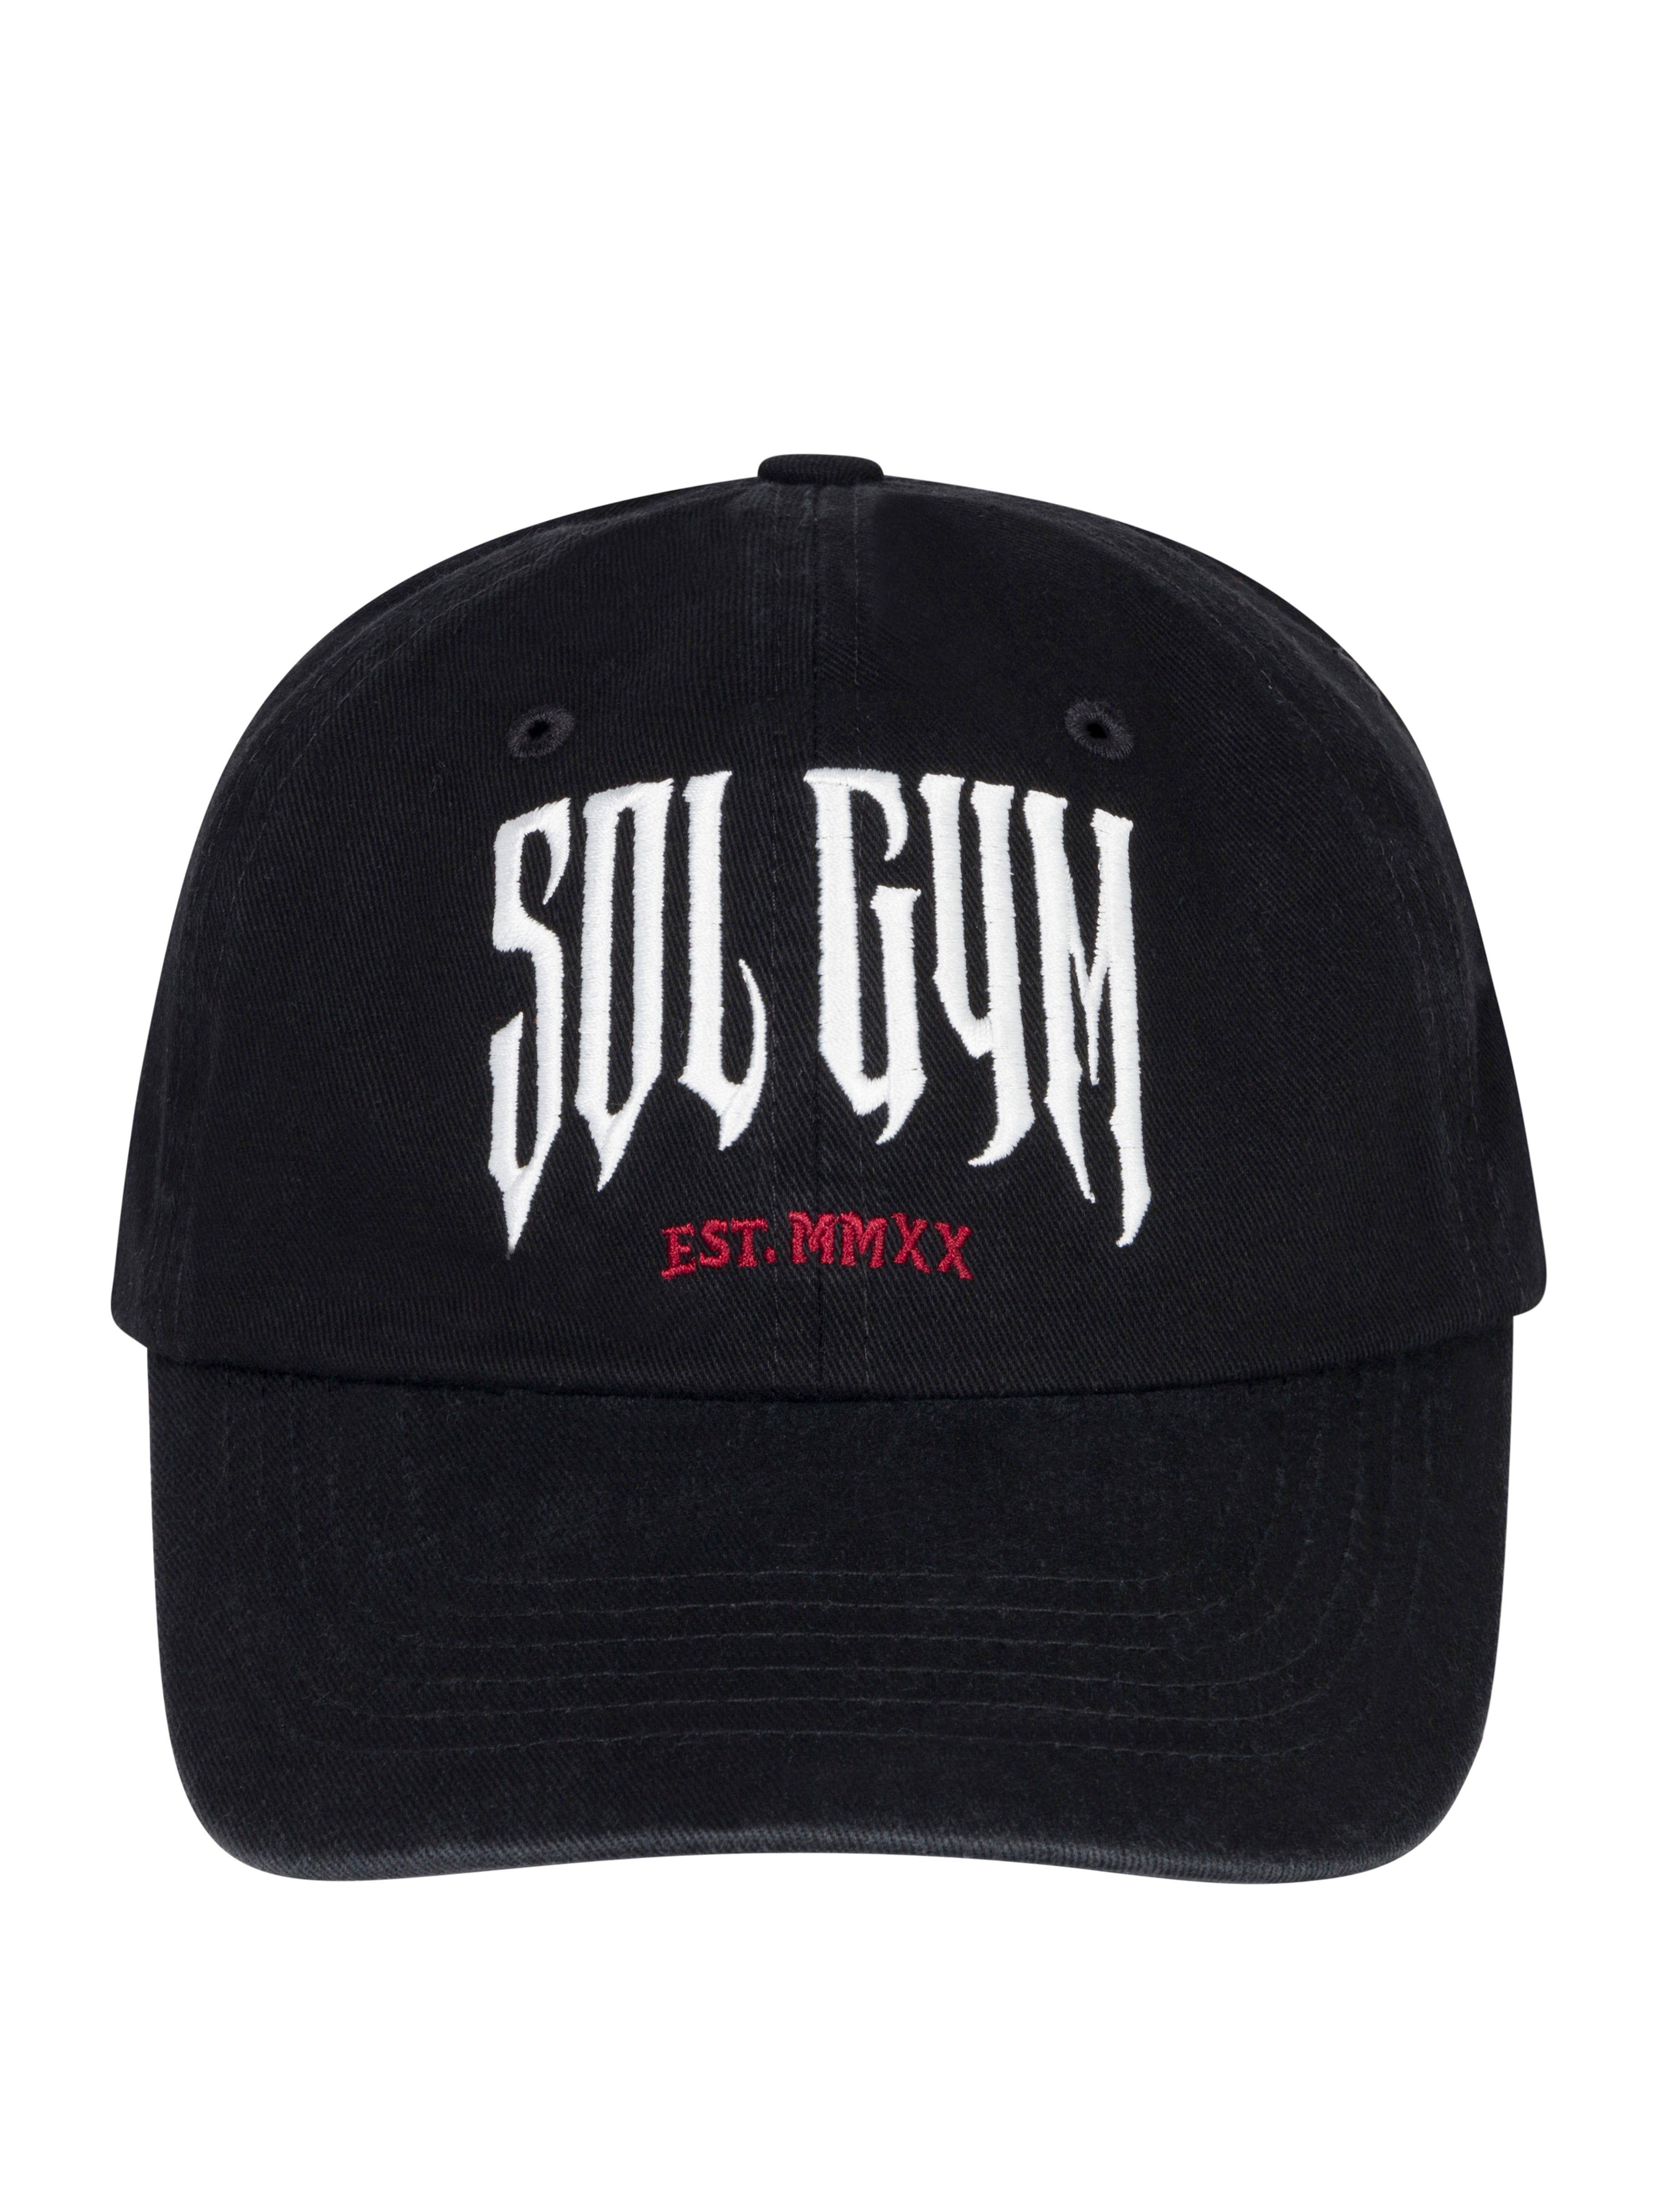 Sol Gym Heavy Metal Cap, Black